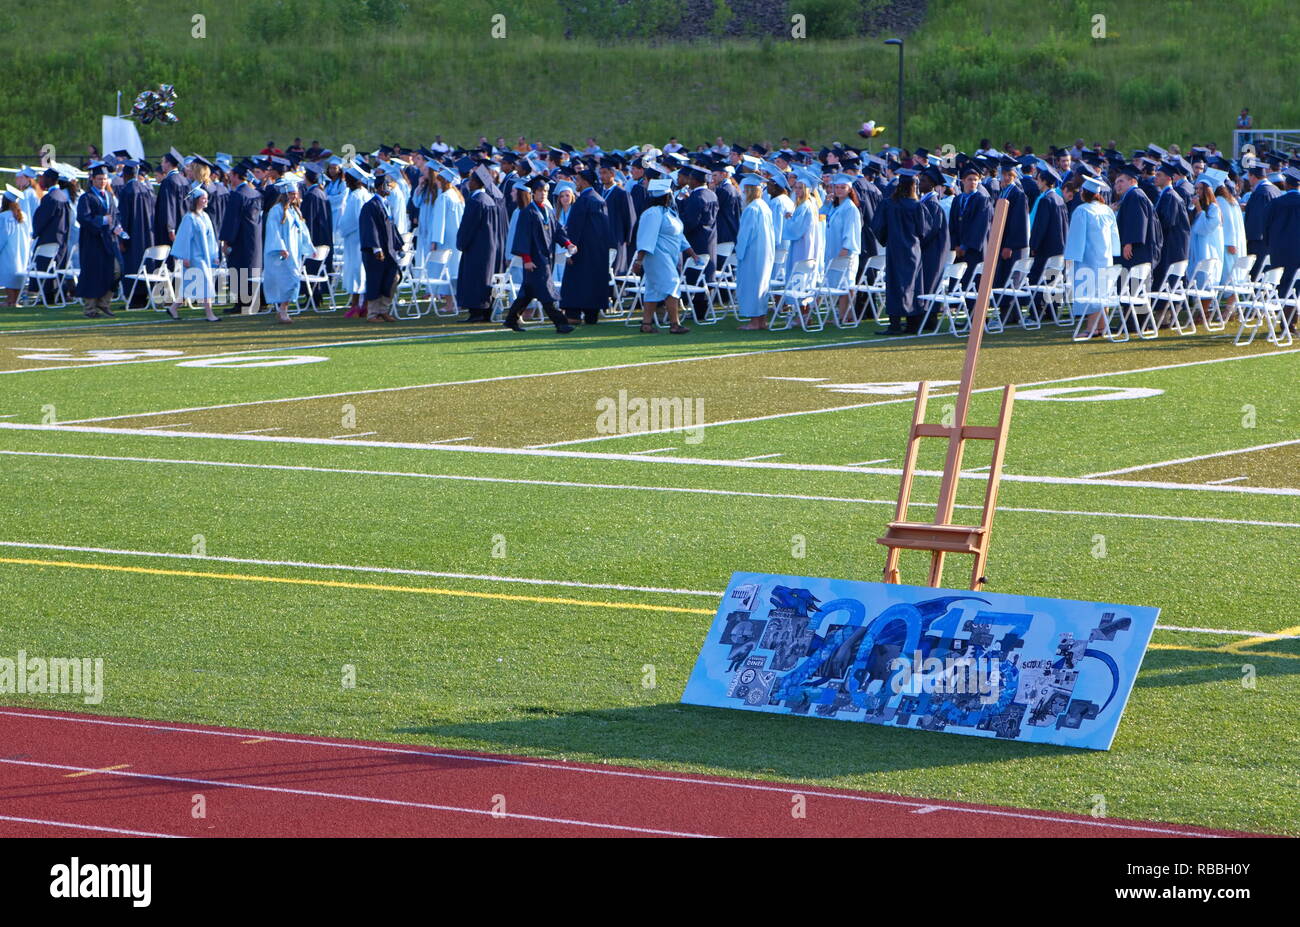 Middletown, CT USA. Jun 2013. Middletown High School Class of 2013 graduating banner. Stock Photo